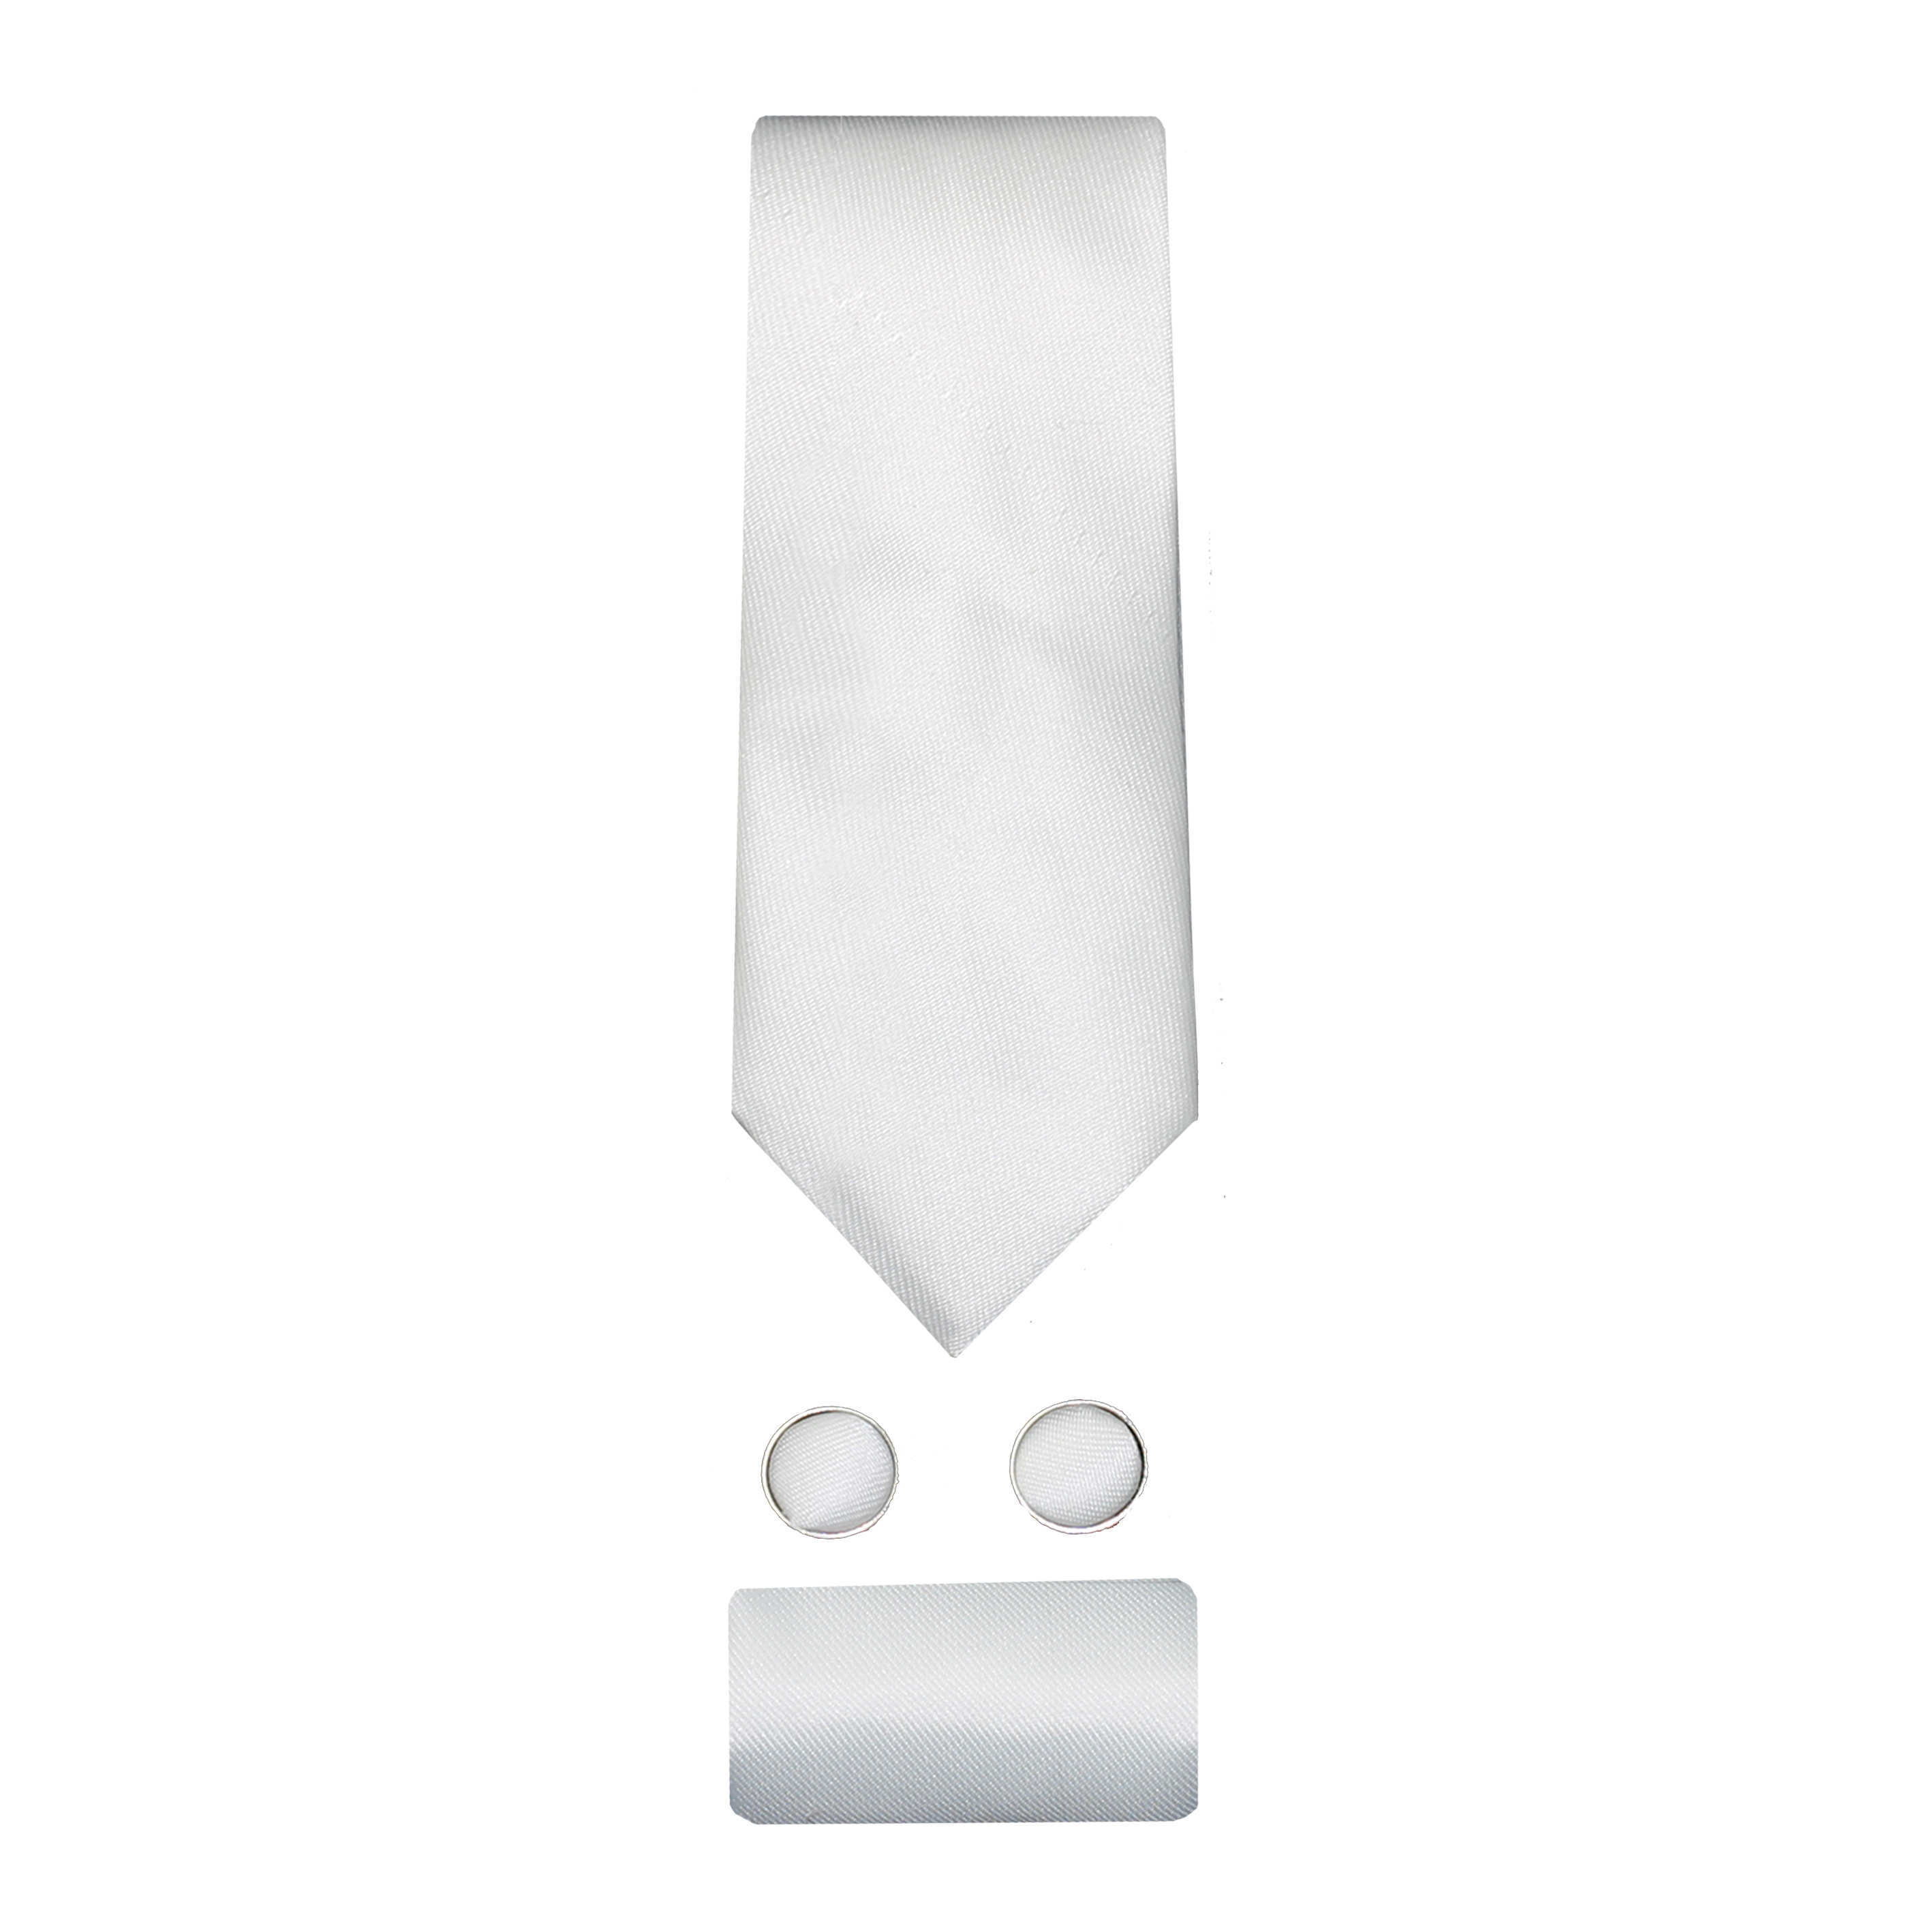 Handmade Silver Diamond Skinny Men's Tie and Pocket Square Set Wedding Tie Prom